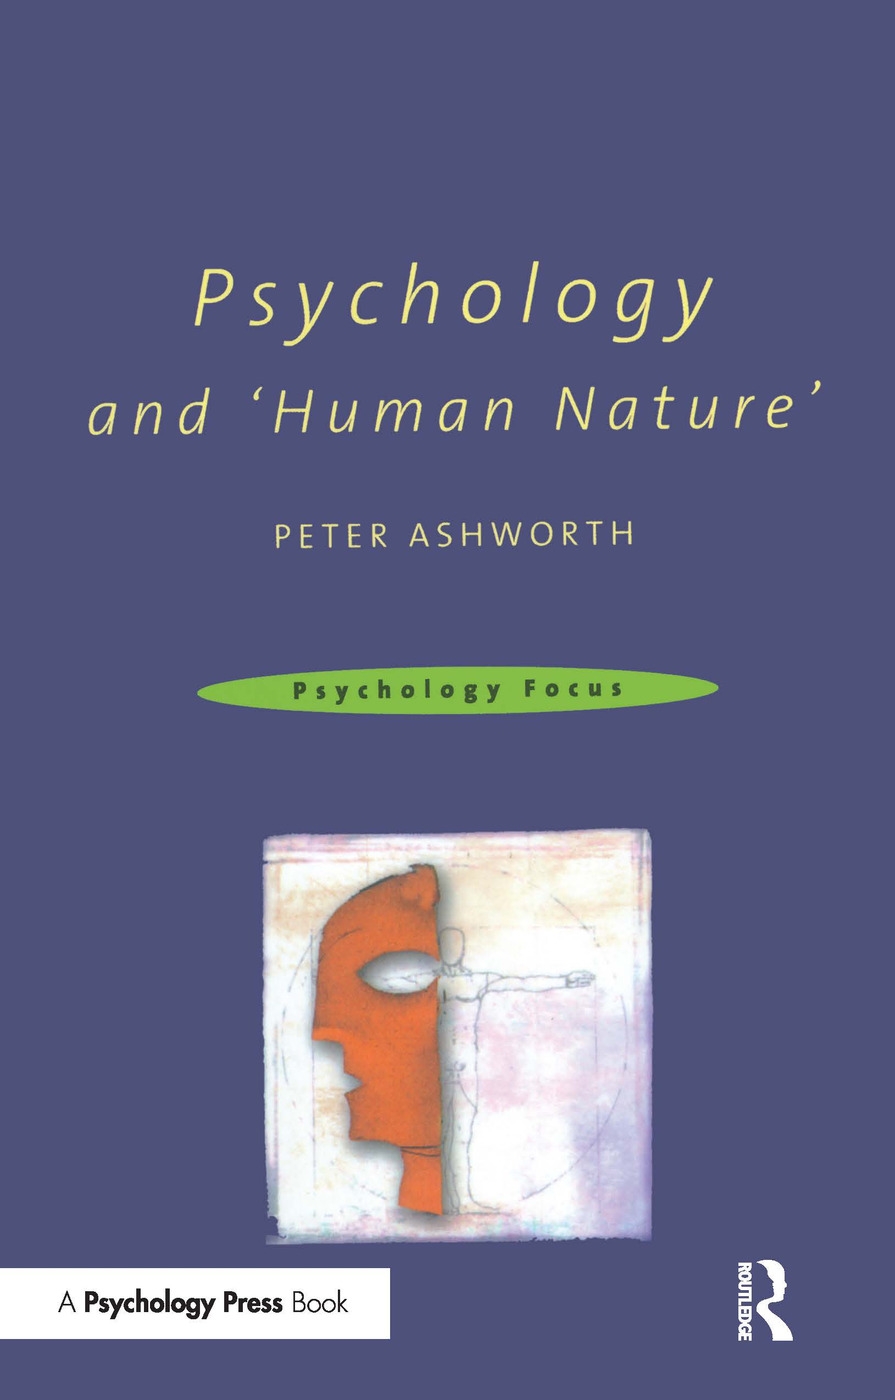 Psychology and Human Nature